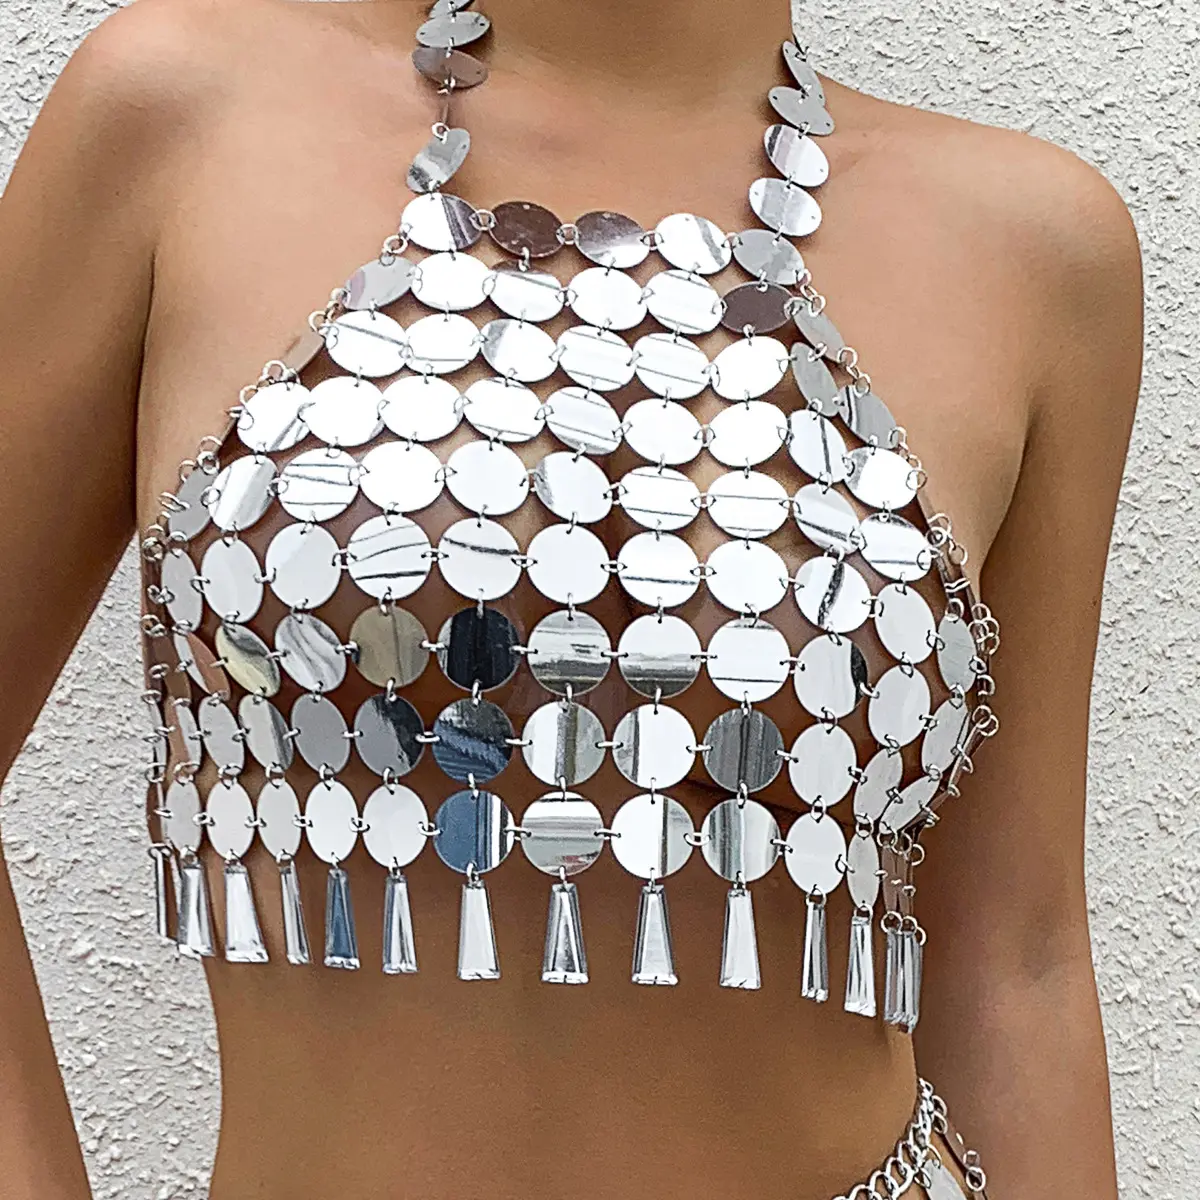 Halter Festival Sequin Rave Party Tassel Crop Top Silver Bikini Bra Top Body Chain Harness Jewelry Gold Chain Mail Mini Skirt